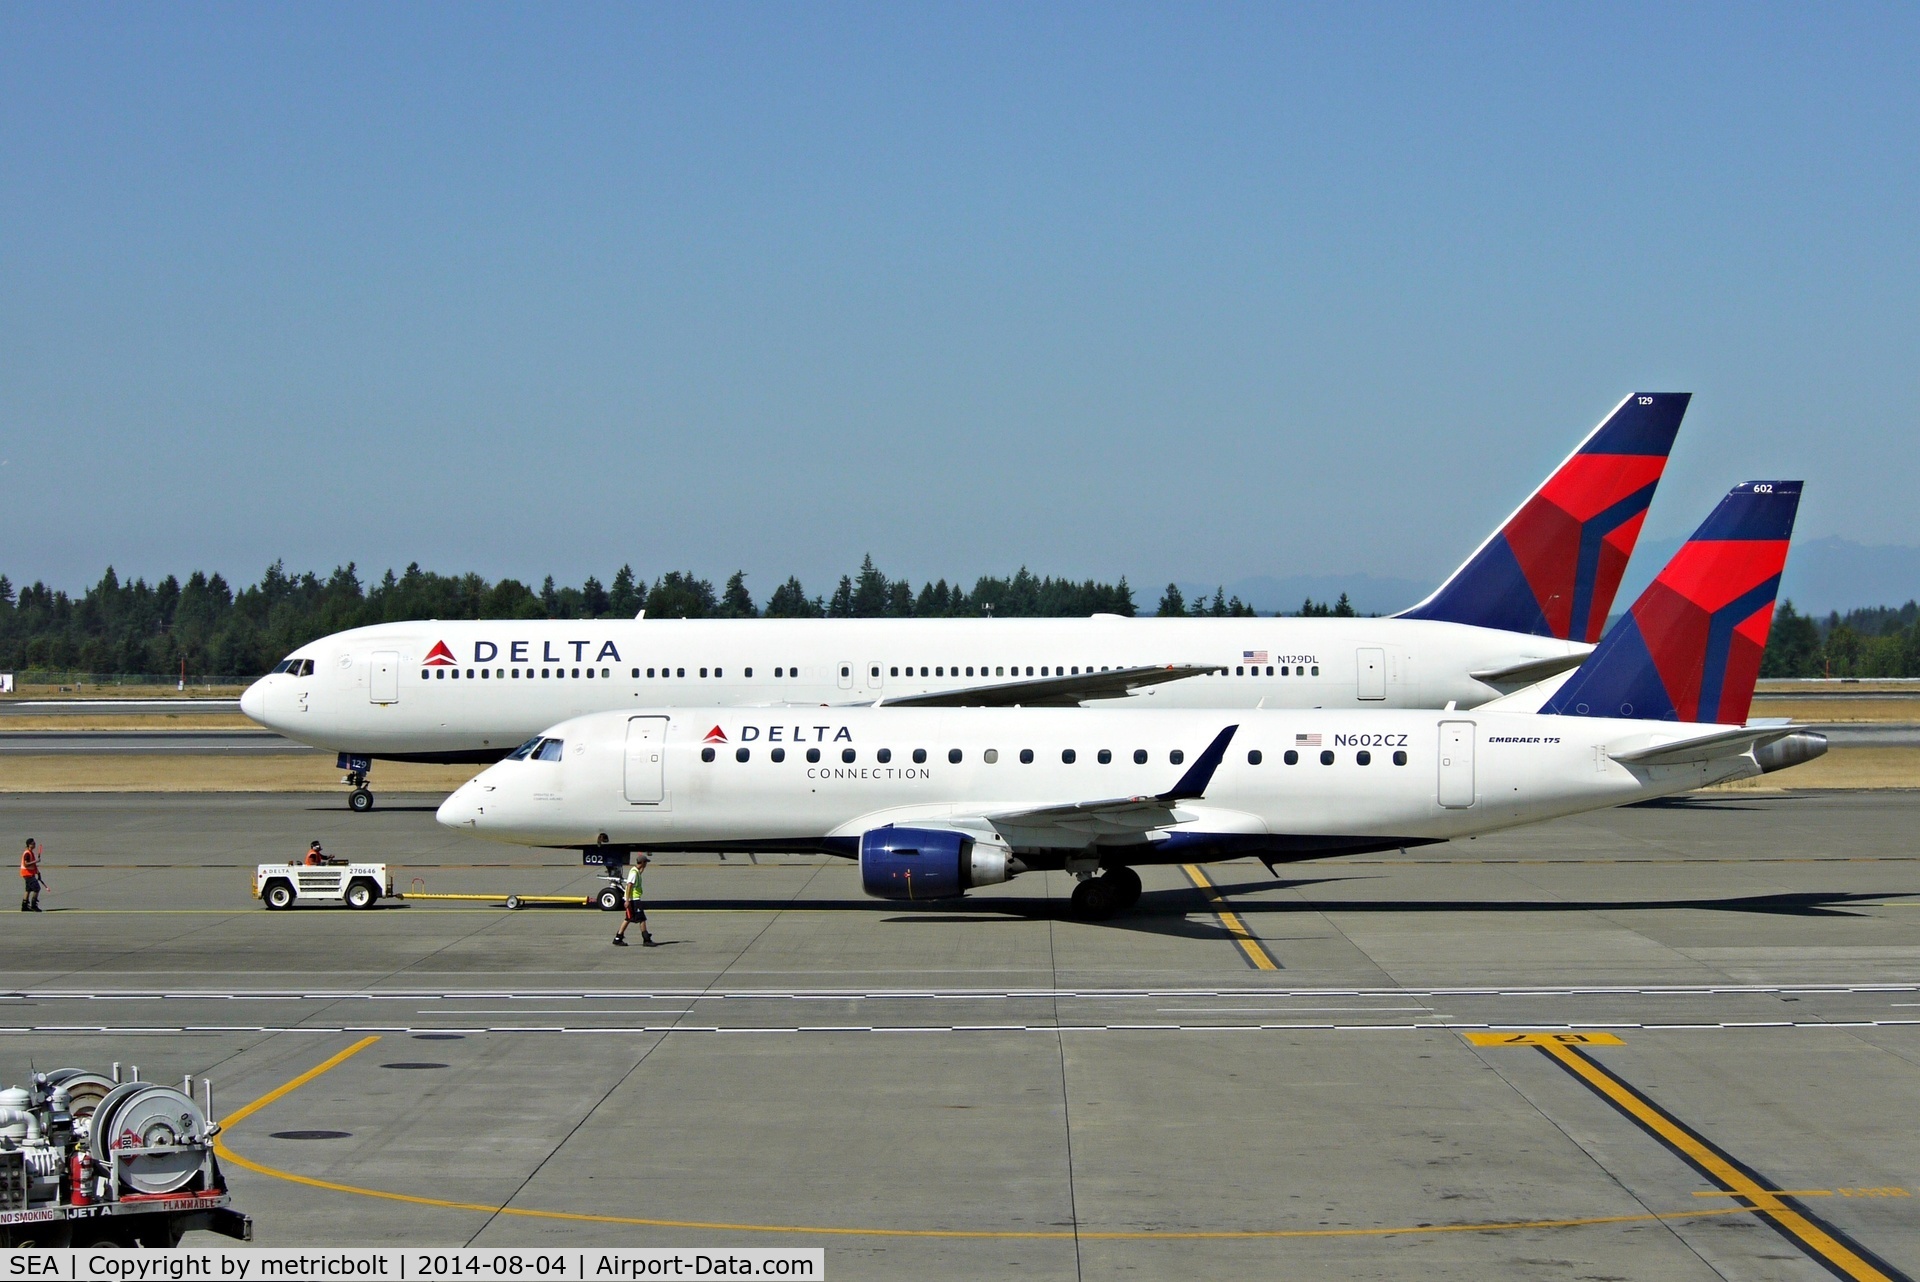 Seattle-tacoma International Airport (SEA) - Delta jets at SEA